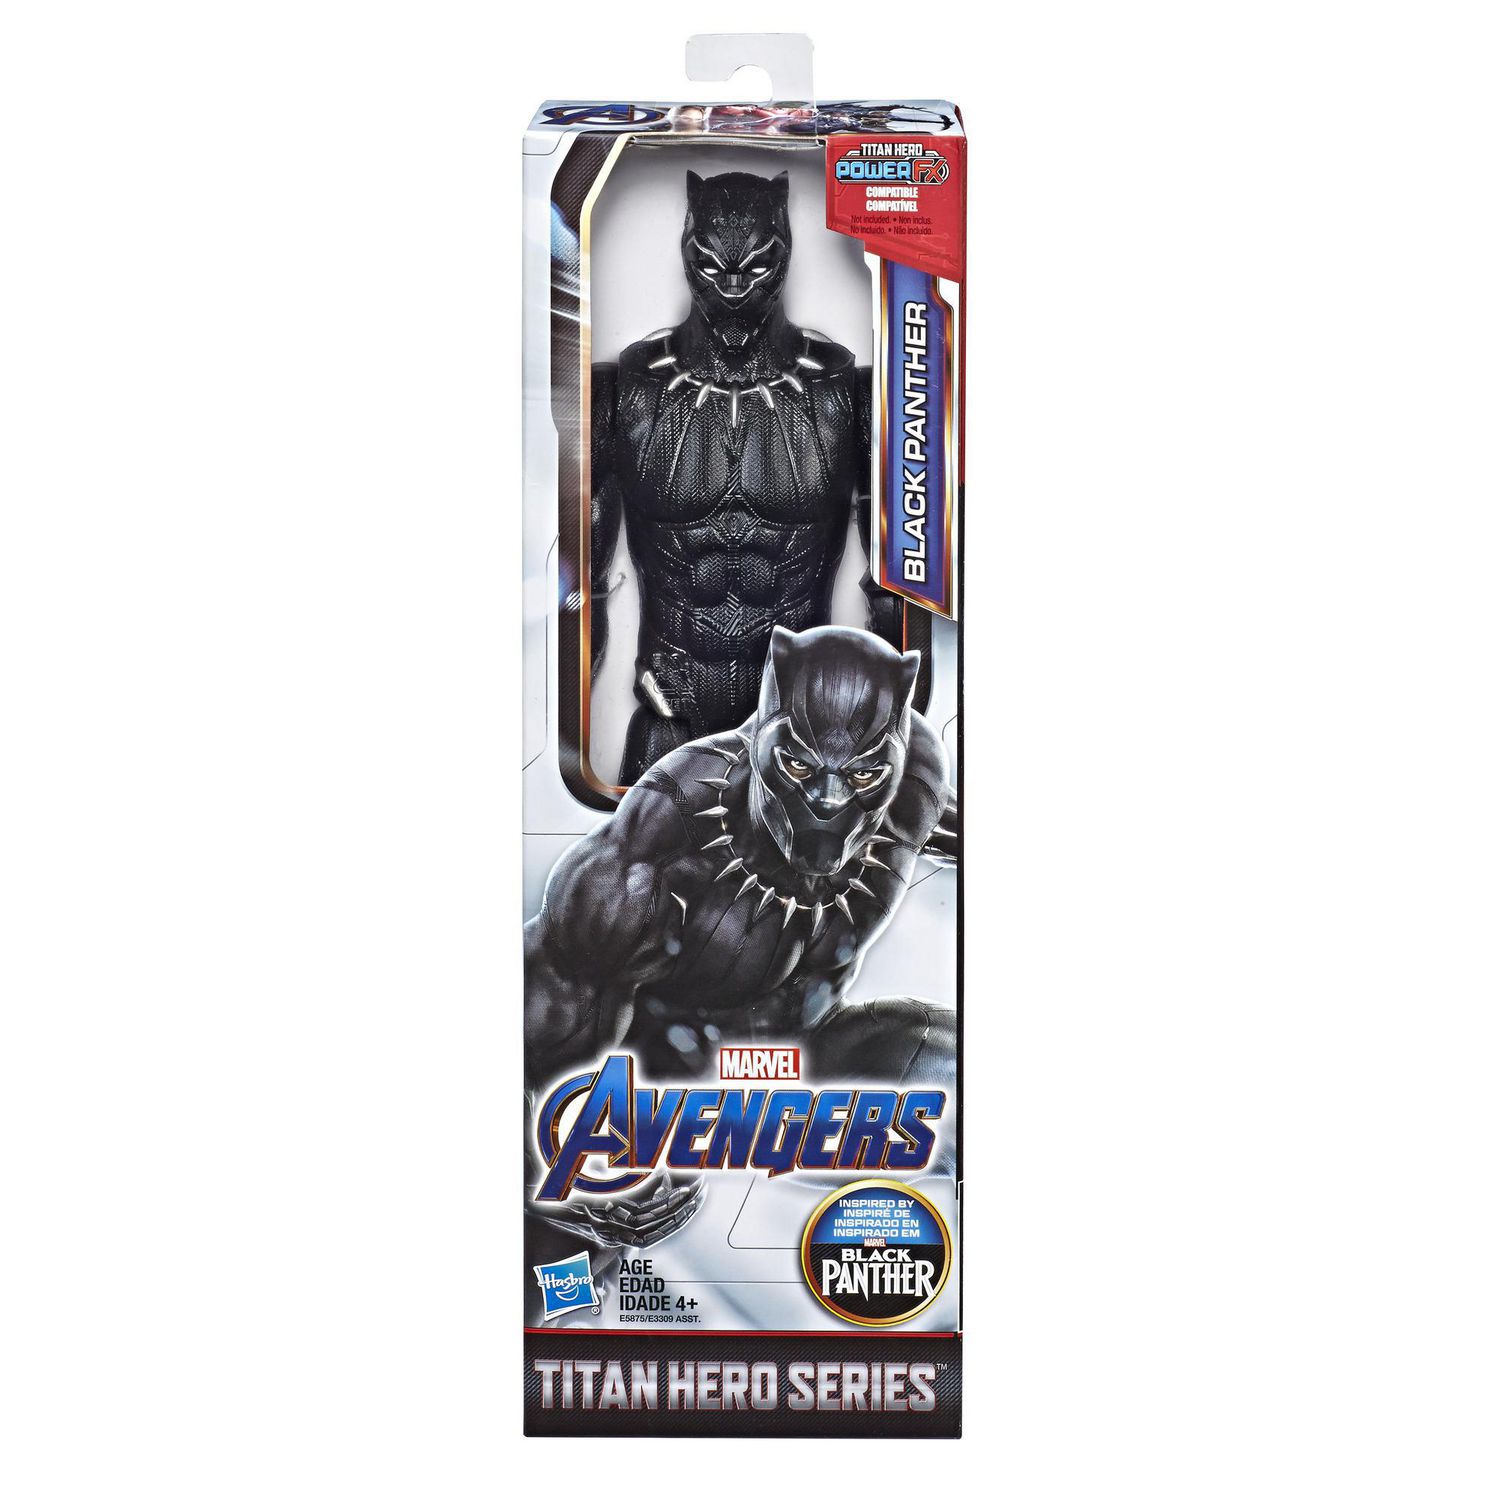 avenger infinity war titan hero series